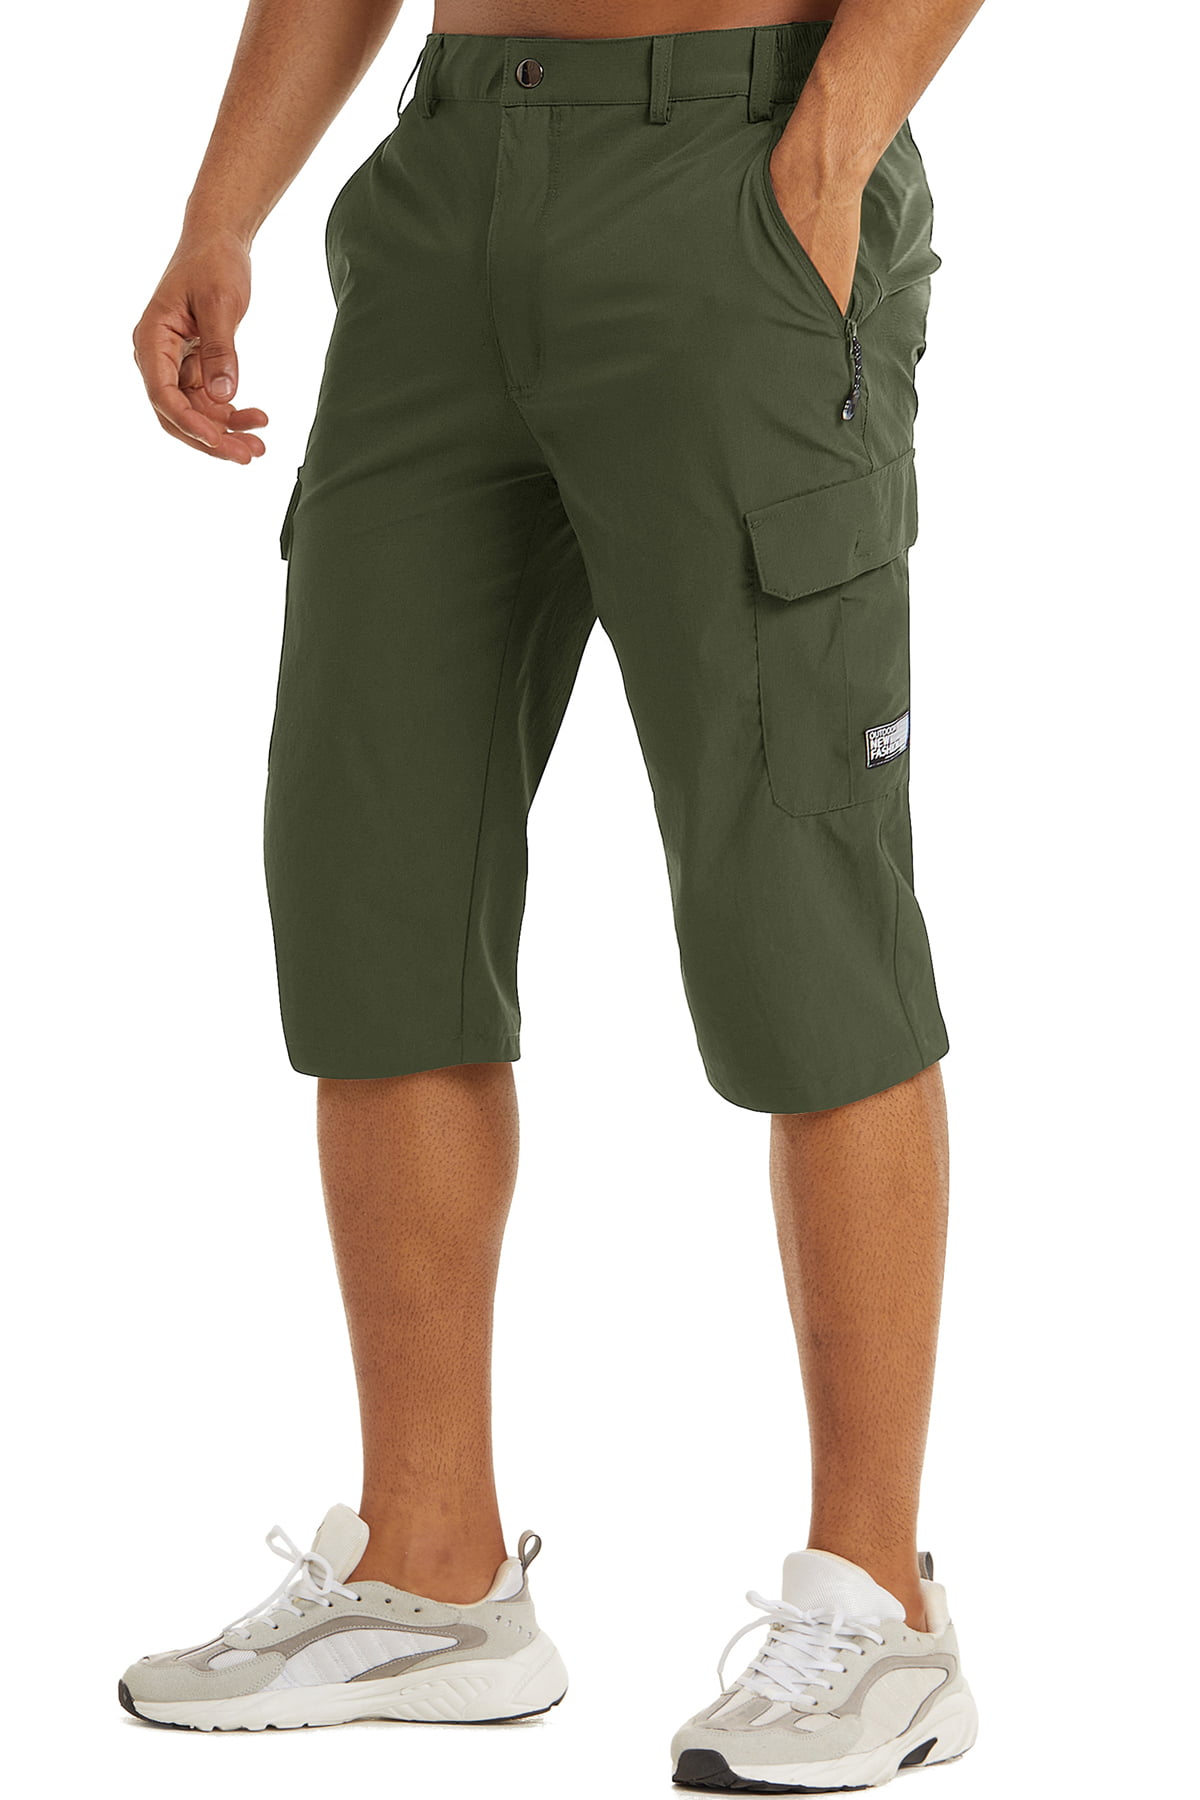 30/32/34/36 Free Shipping!Spring Mens casual fashion green shorts pants Size 